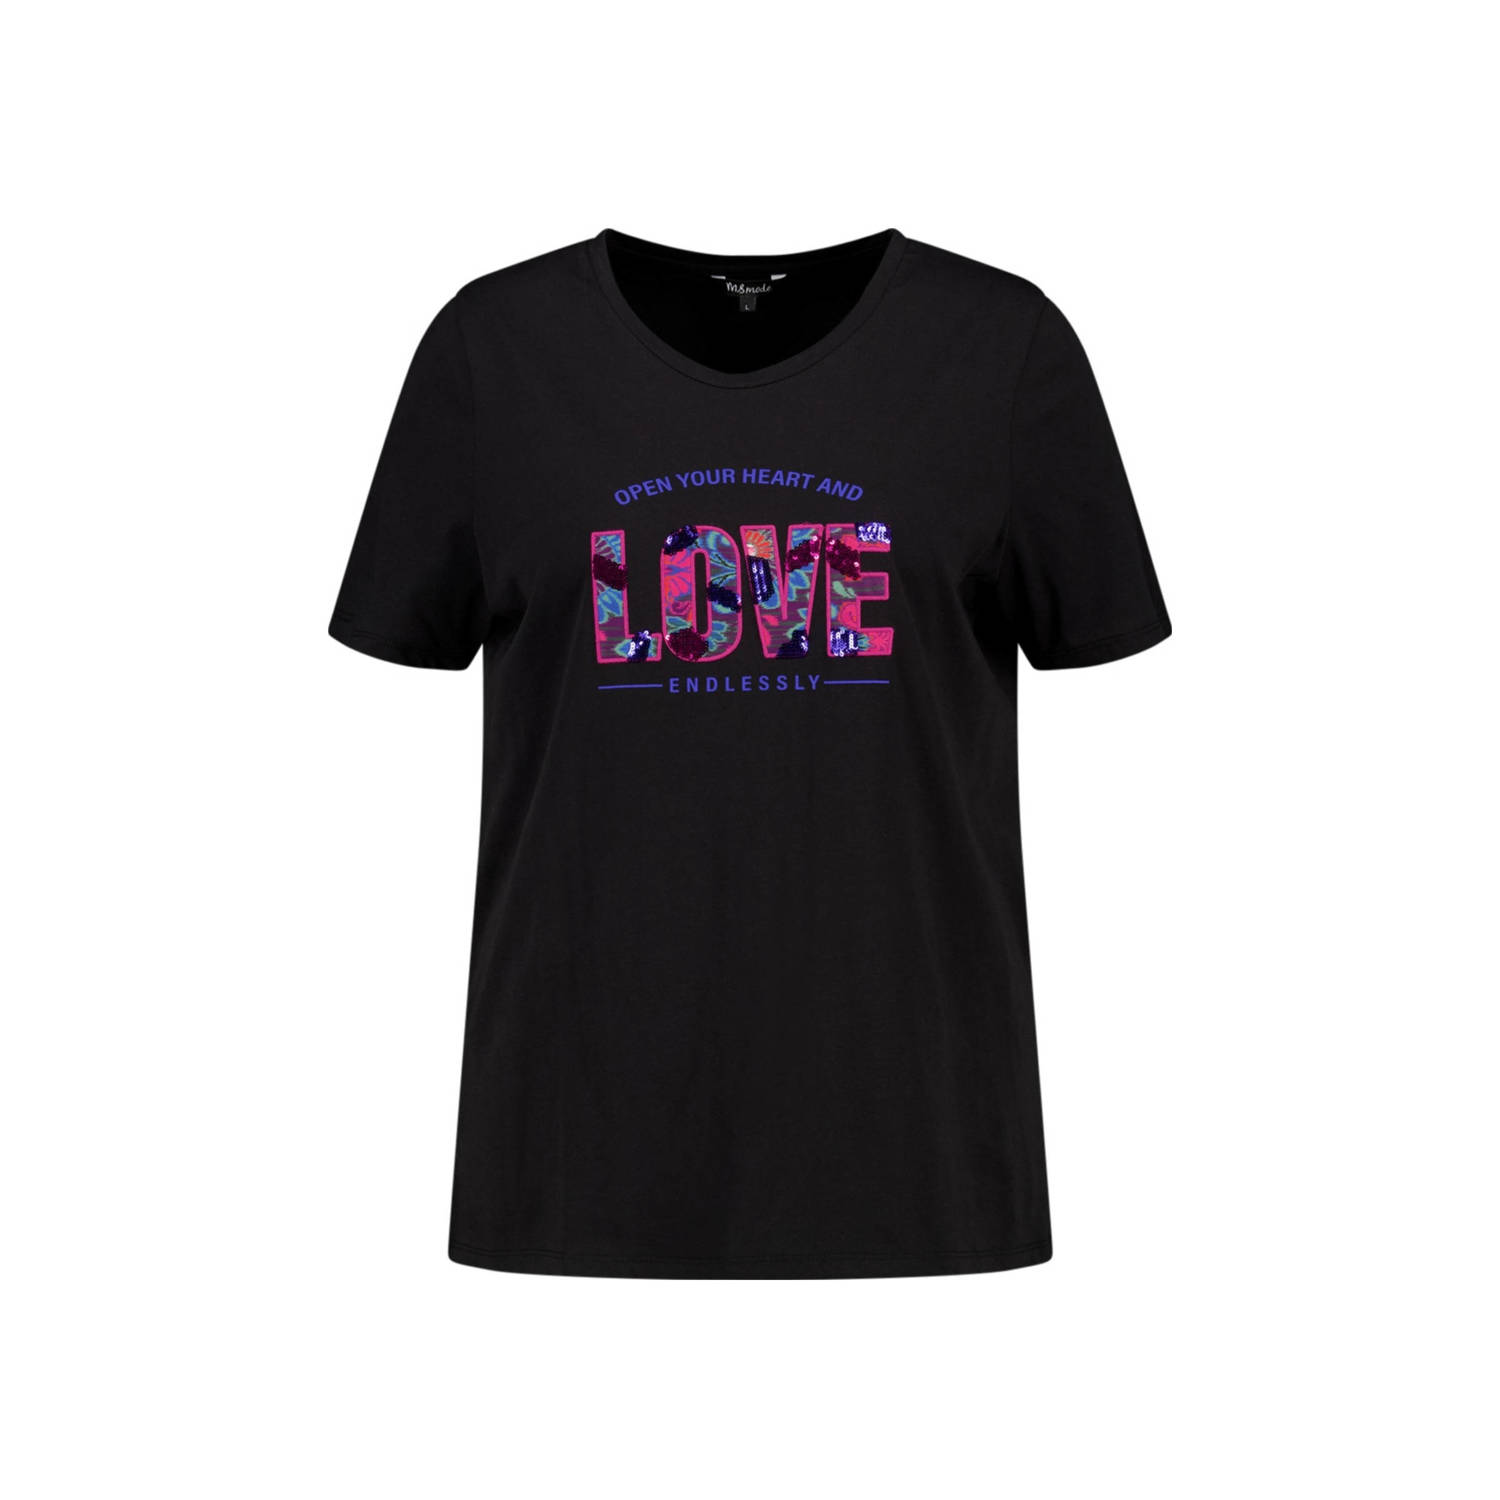 MS Mode T-shirt met tekst en pailletten zwart roze blauw